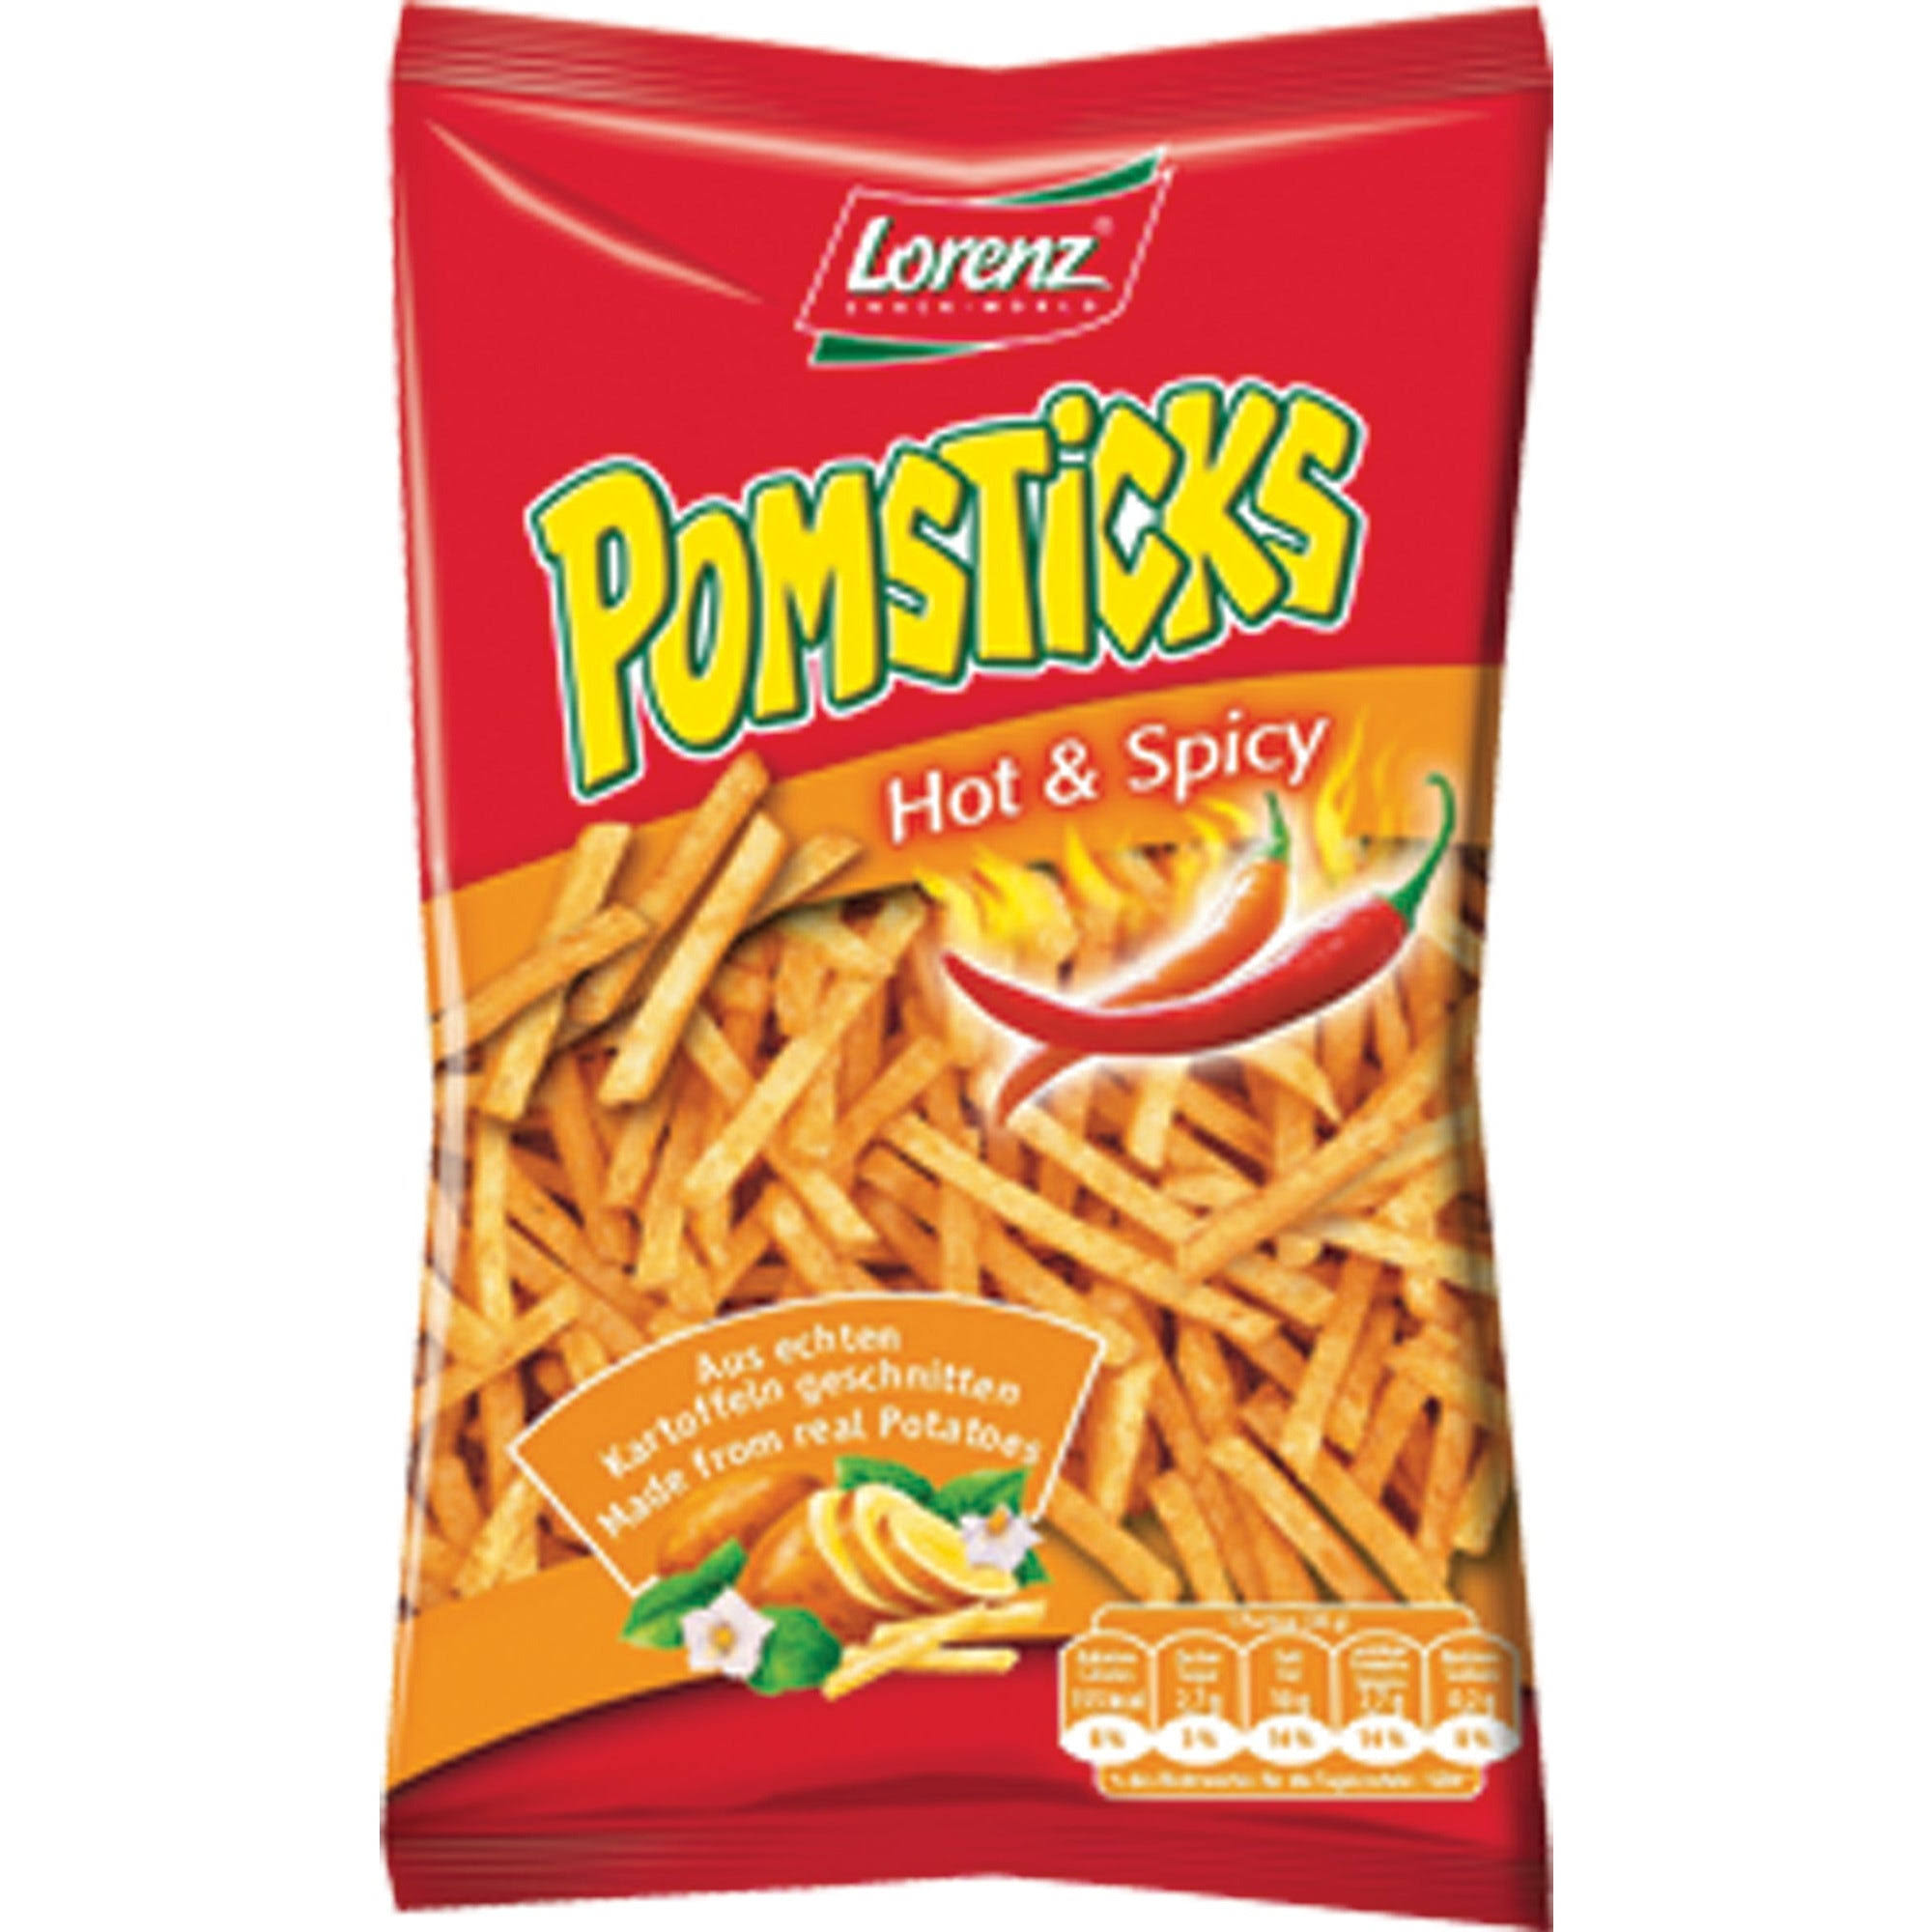 Lorenz Pomsticks Hot and Spicy Potato Sticks - with Chilli Flavor, 100g